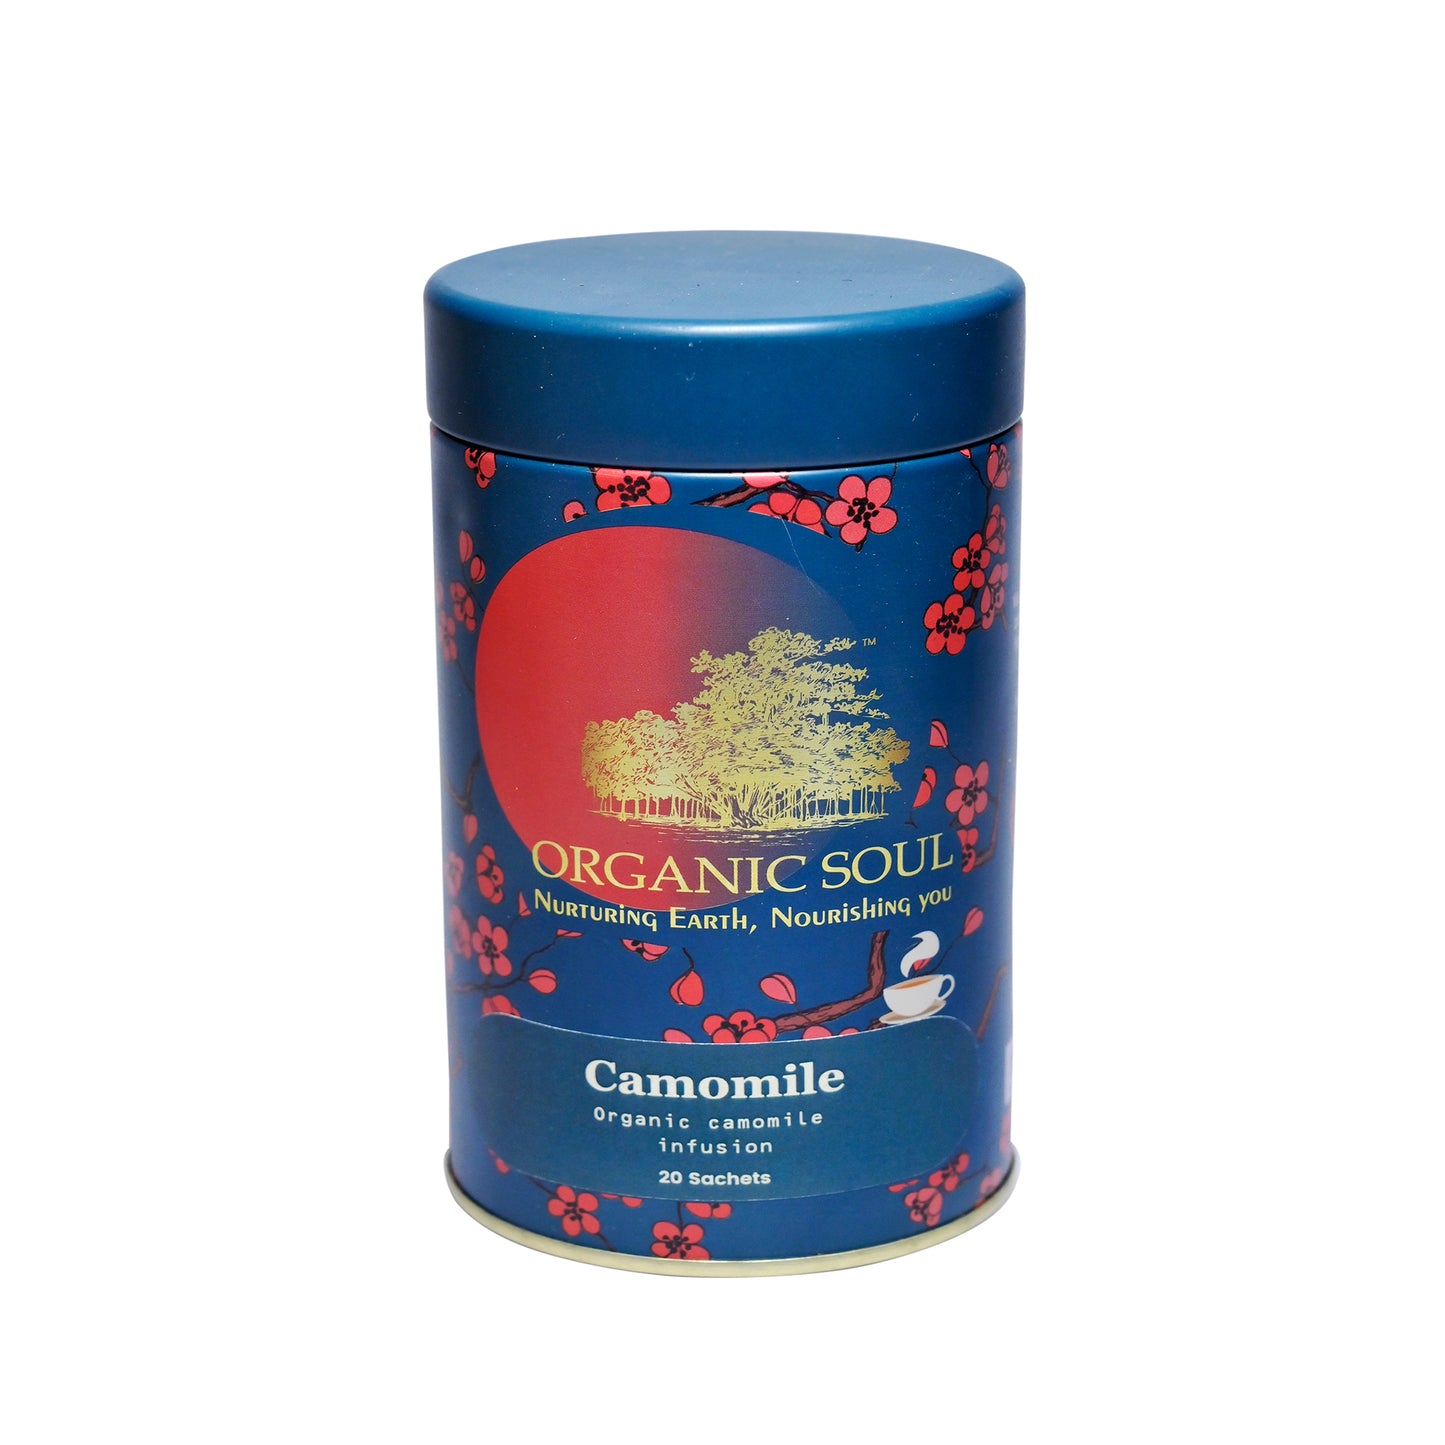 Organic Soul - Organic Chamomile Herbal Tea Infusion, 20 Sachets| Lemongrass, Peppermint, Valerian Root, Liquorice, Lavender | Camomile Chai